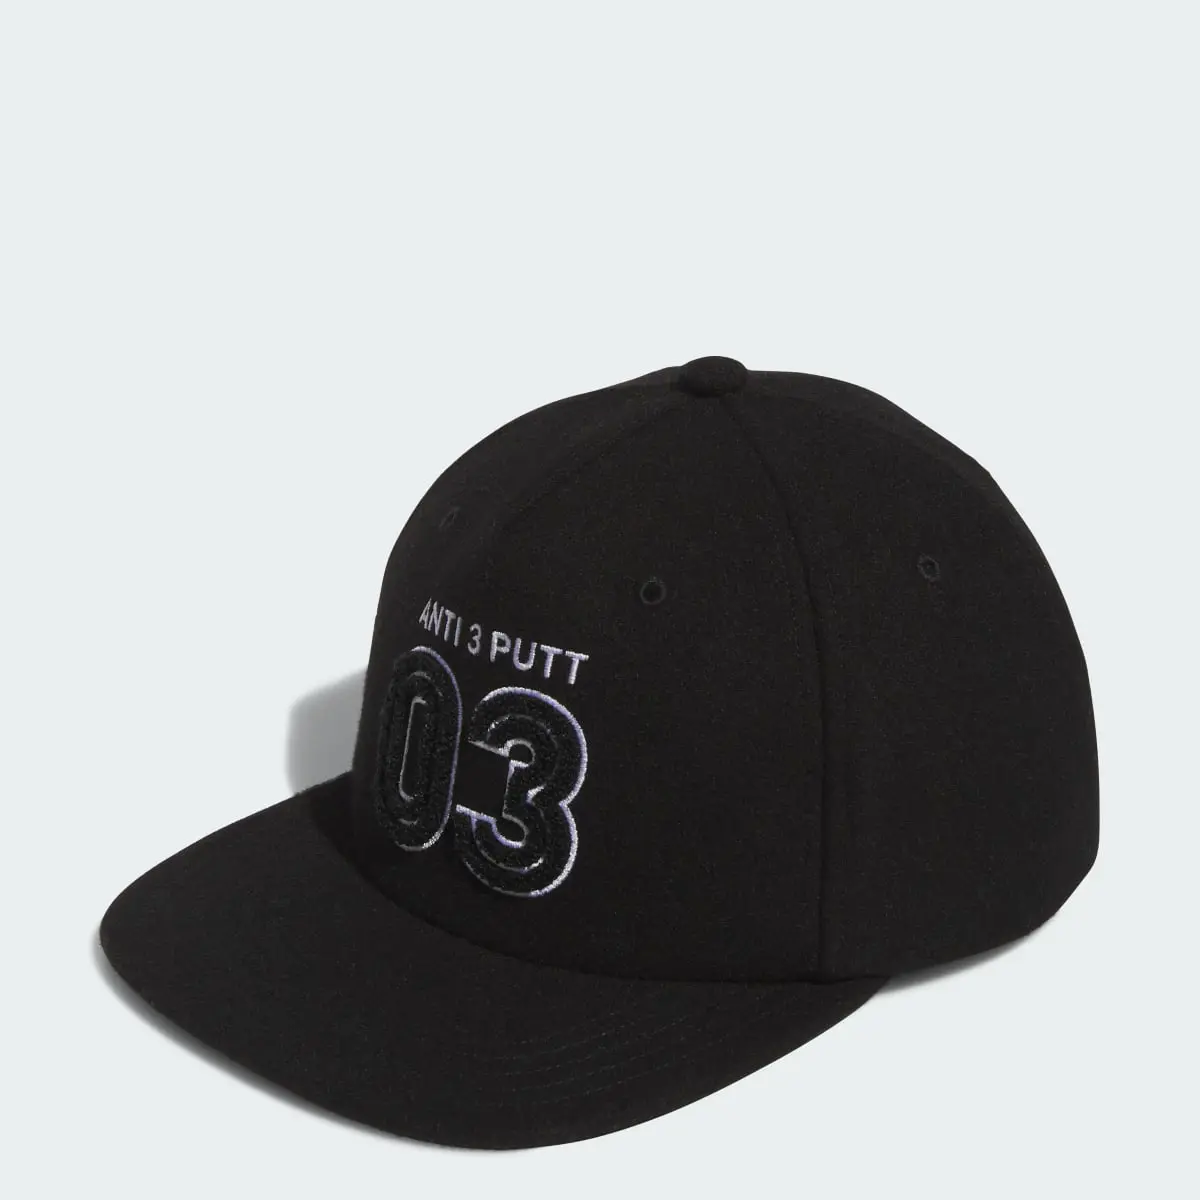 Adidas Anti 3 Putt Hat. 1